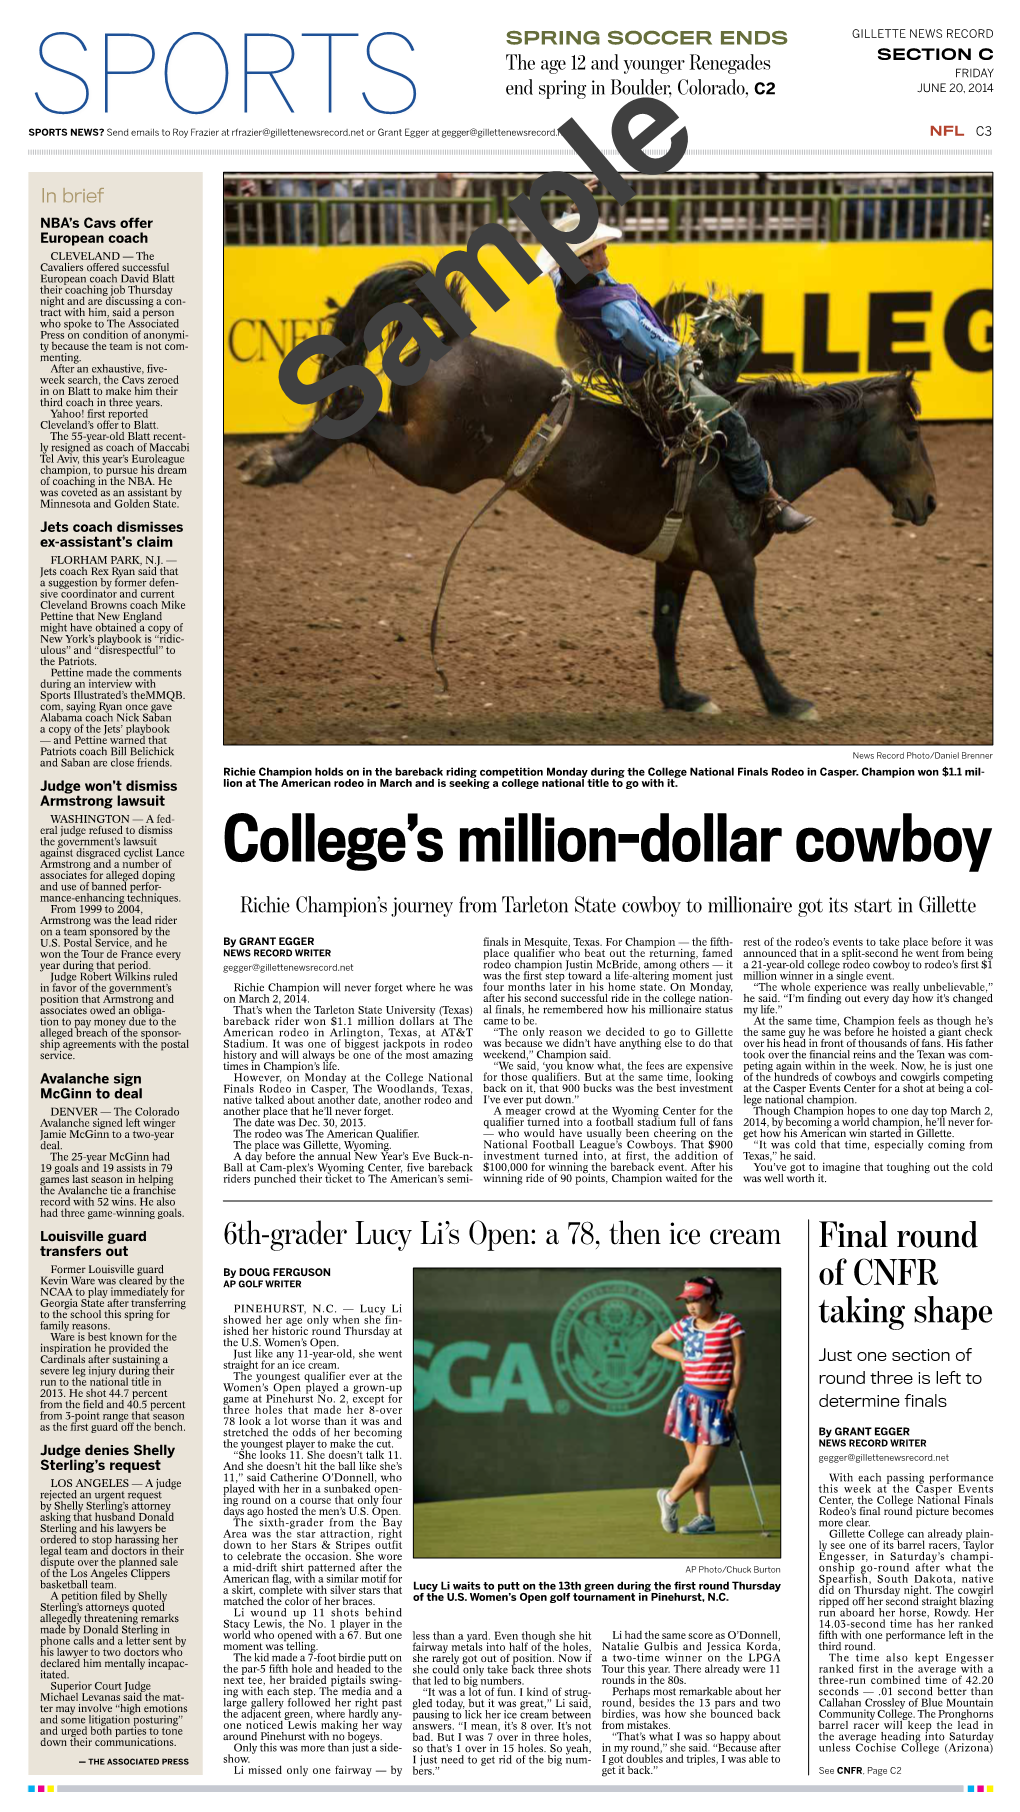 College's Million-Dollar Cowboy